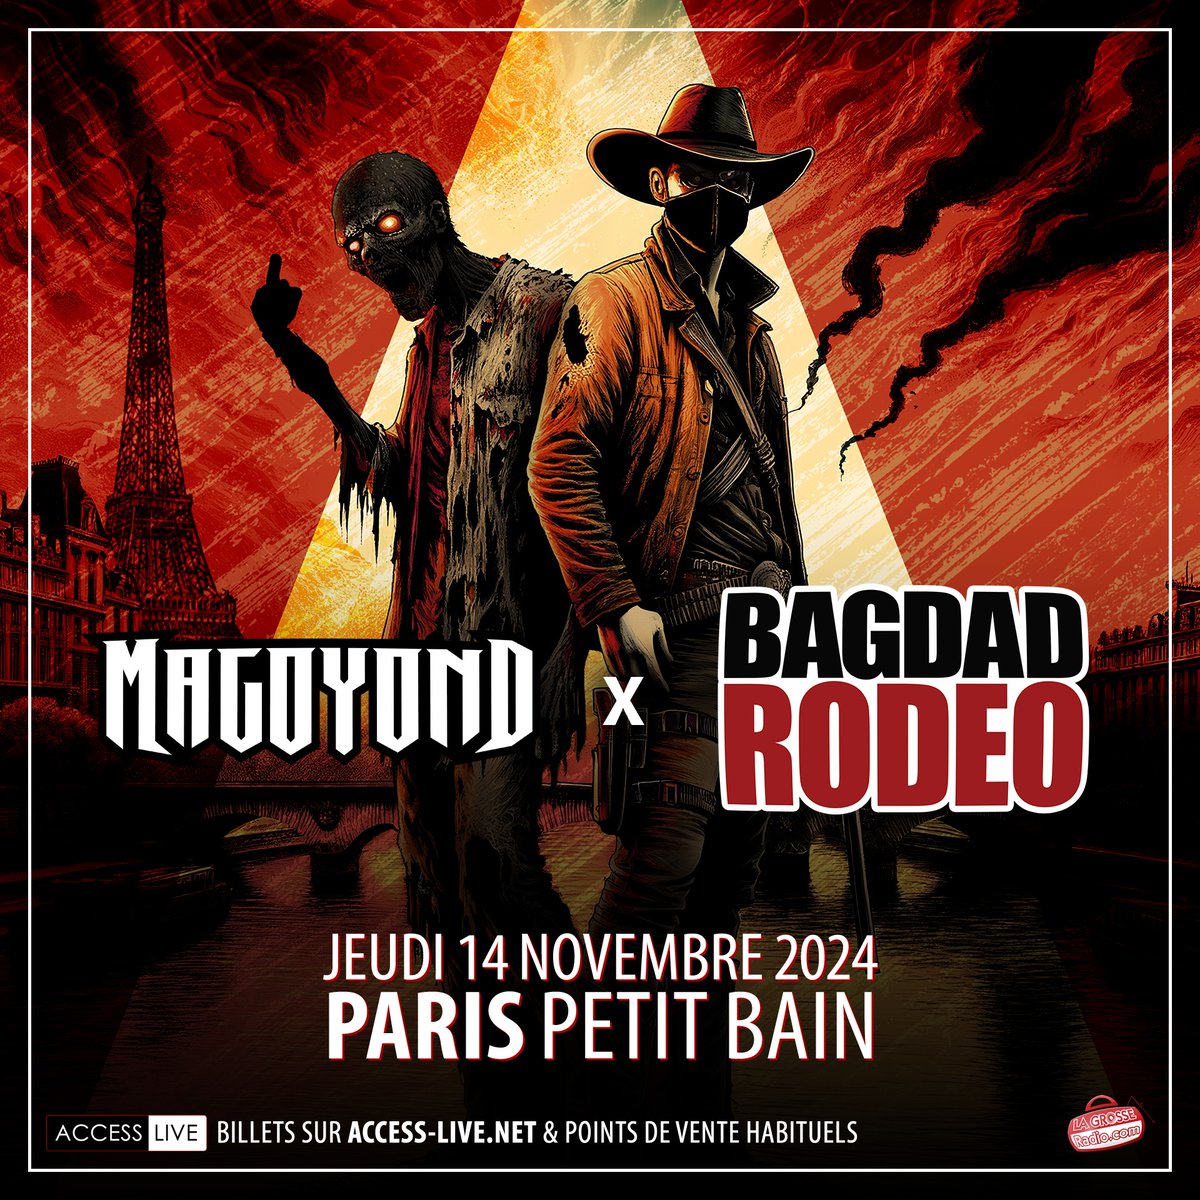 Bagdad Rodeo - Magoyond at Petit Bain Tickets